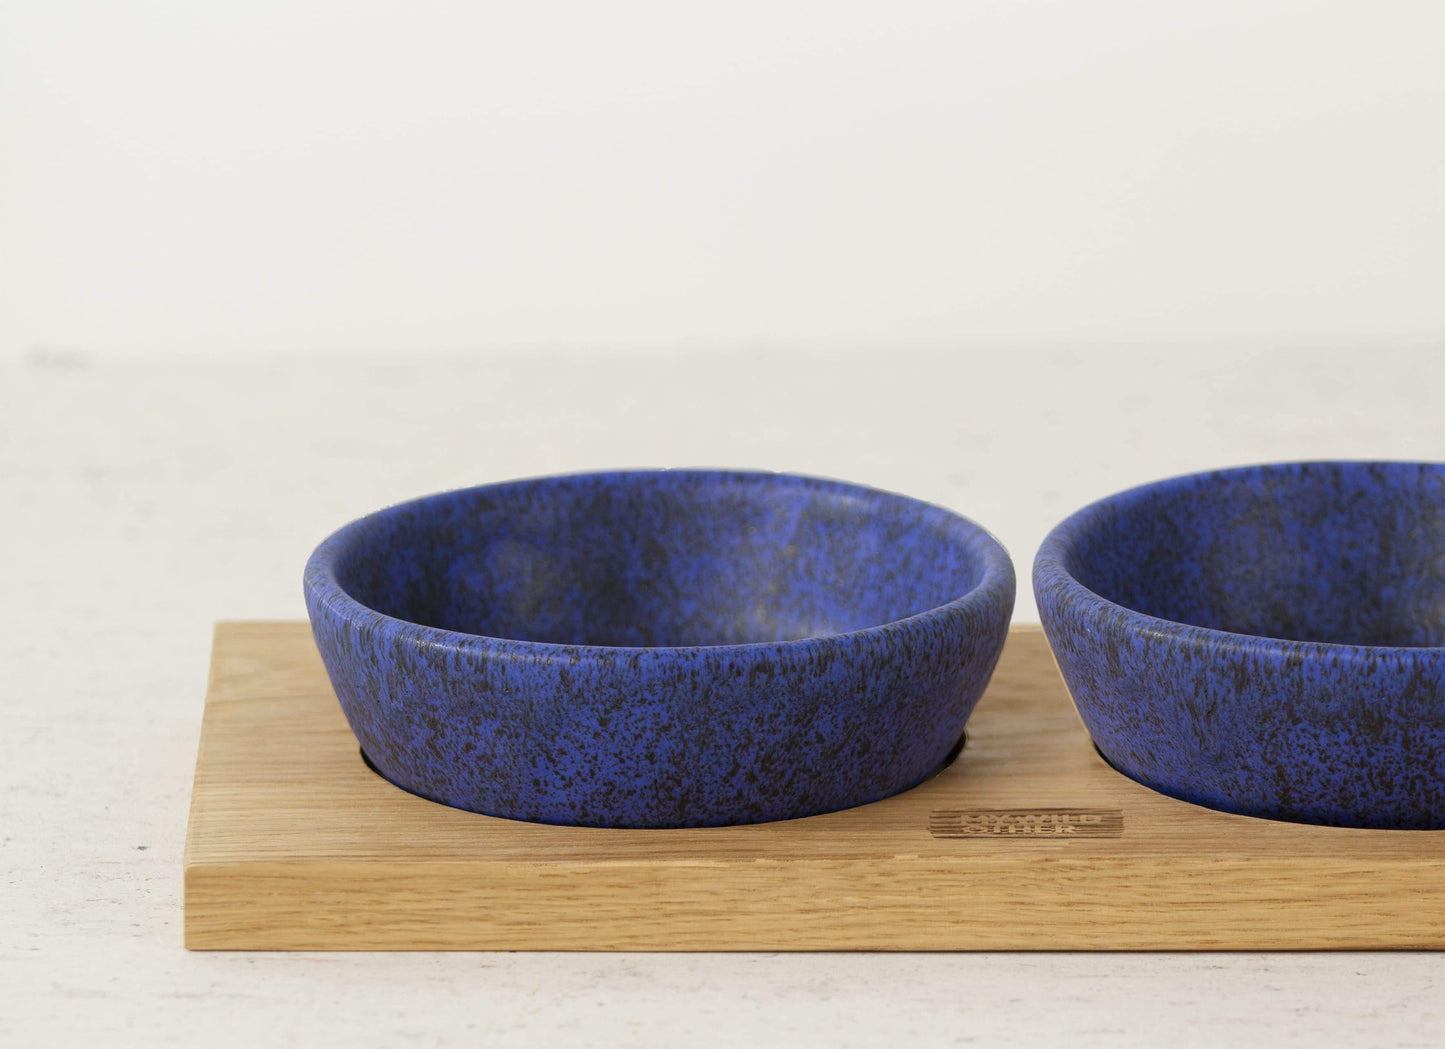 Blue HANDMADE CERAMIC dog bowls - European handmade dog accessories by My Wild Other